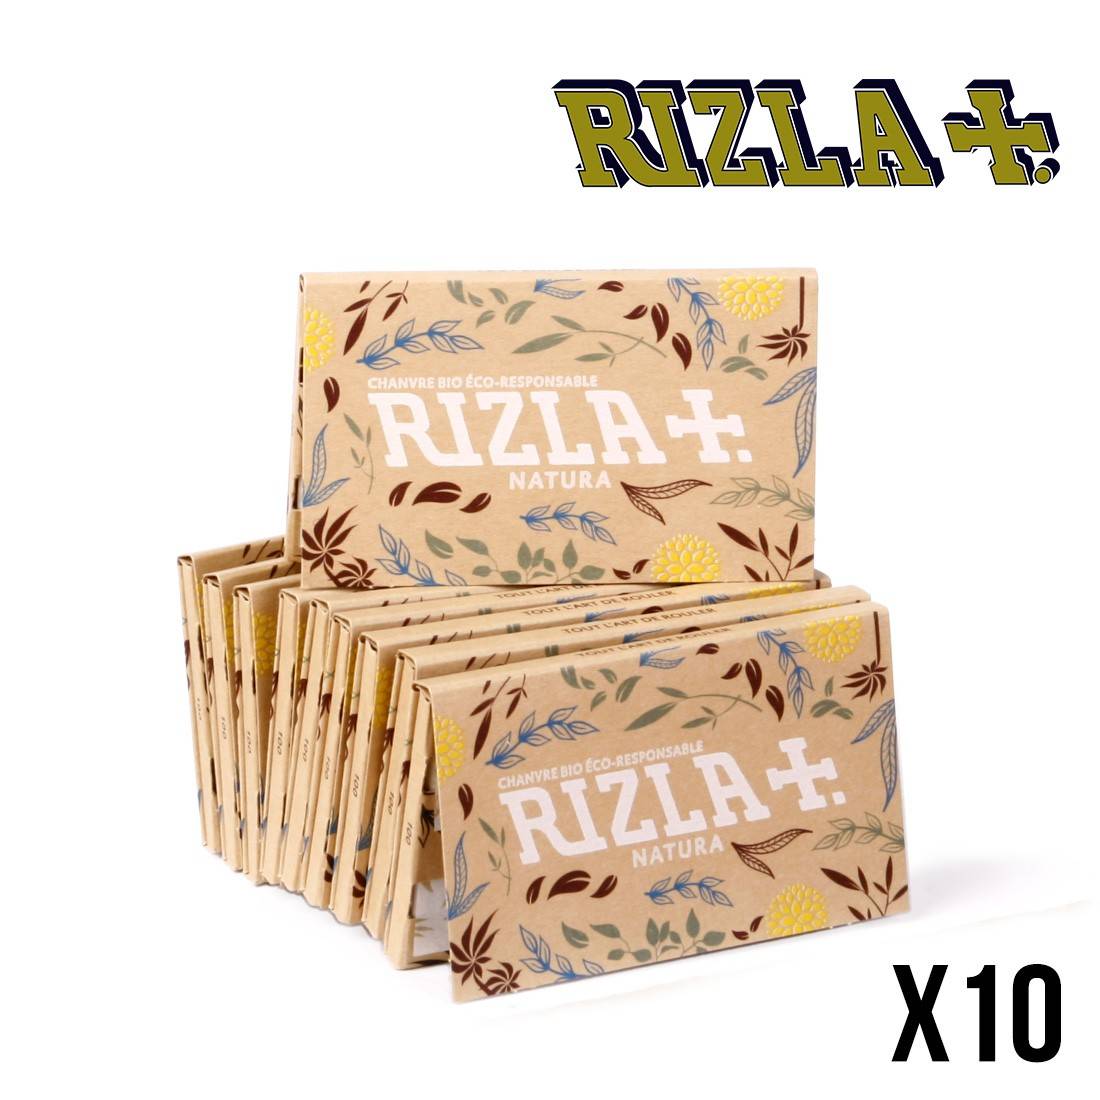 Rizla original rizla+ regular acheter, Feuilles petit format